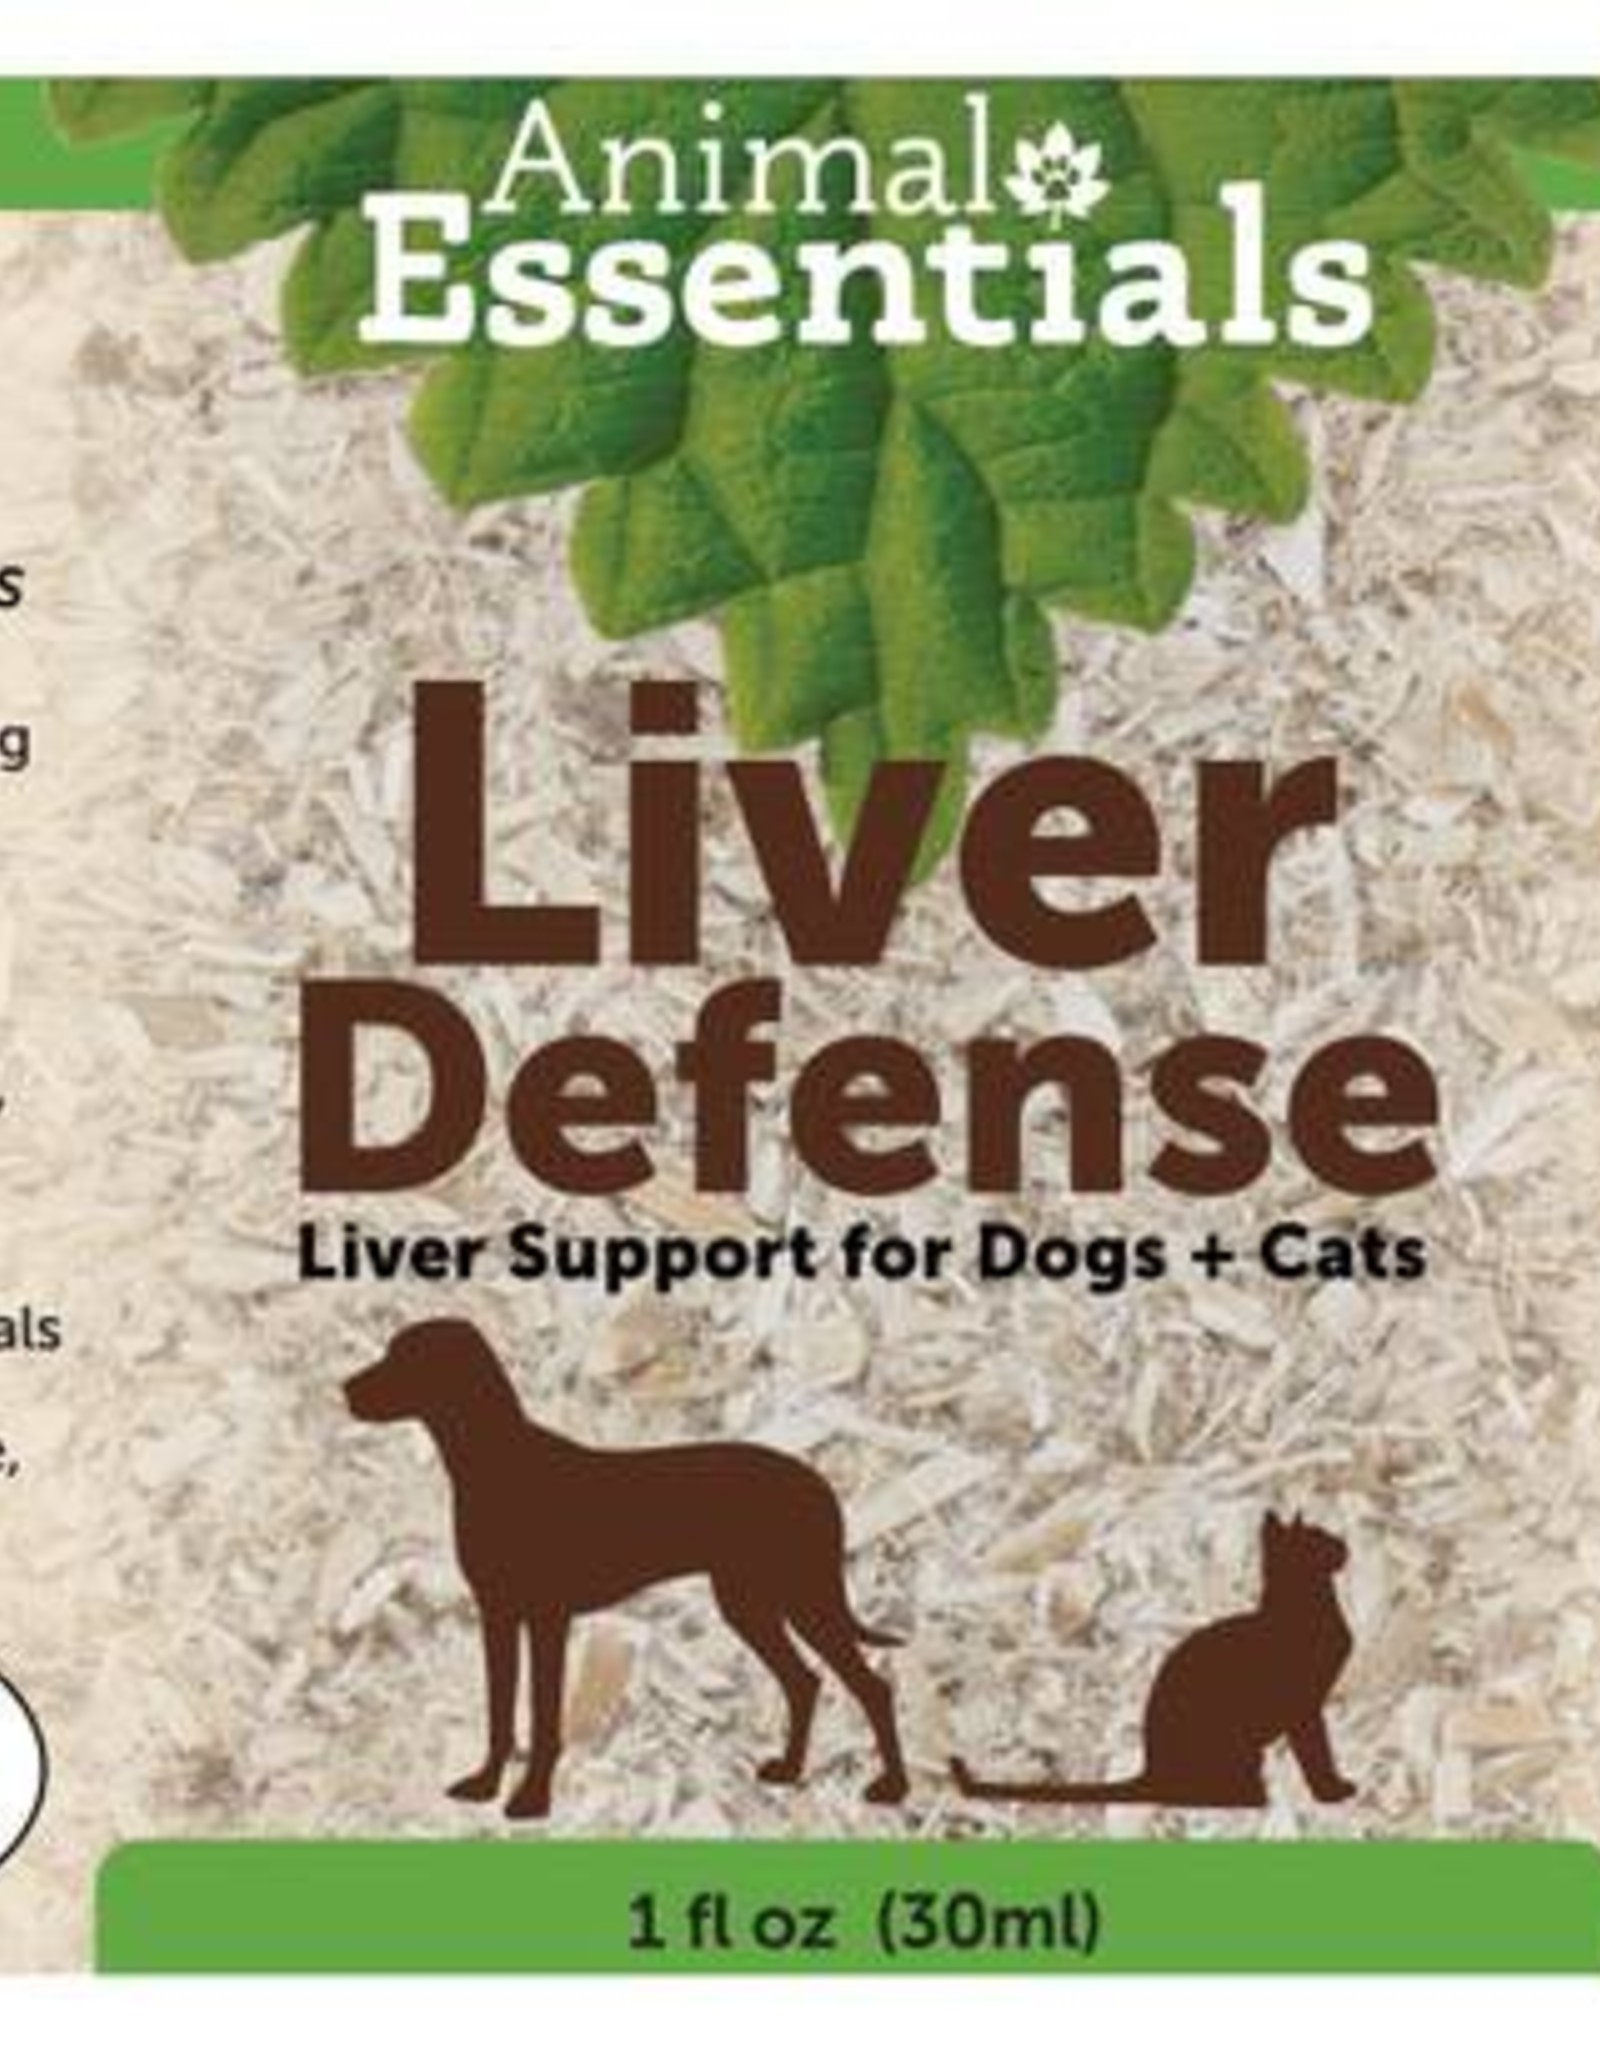 Animal Essentials Animal Essentials Liver Defense 1oz